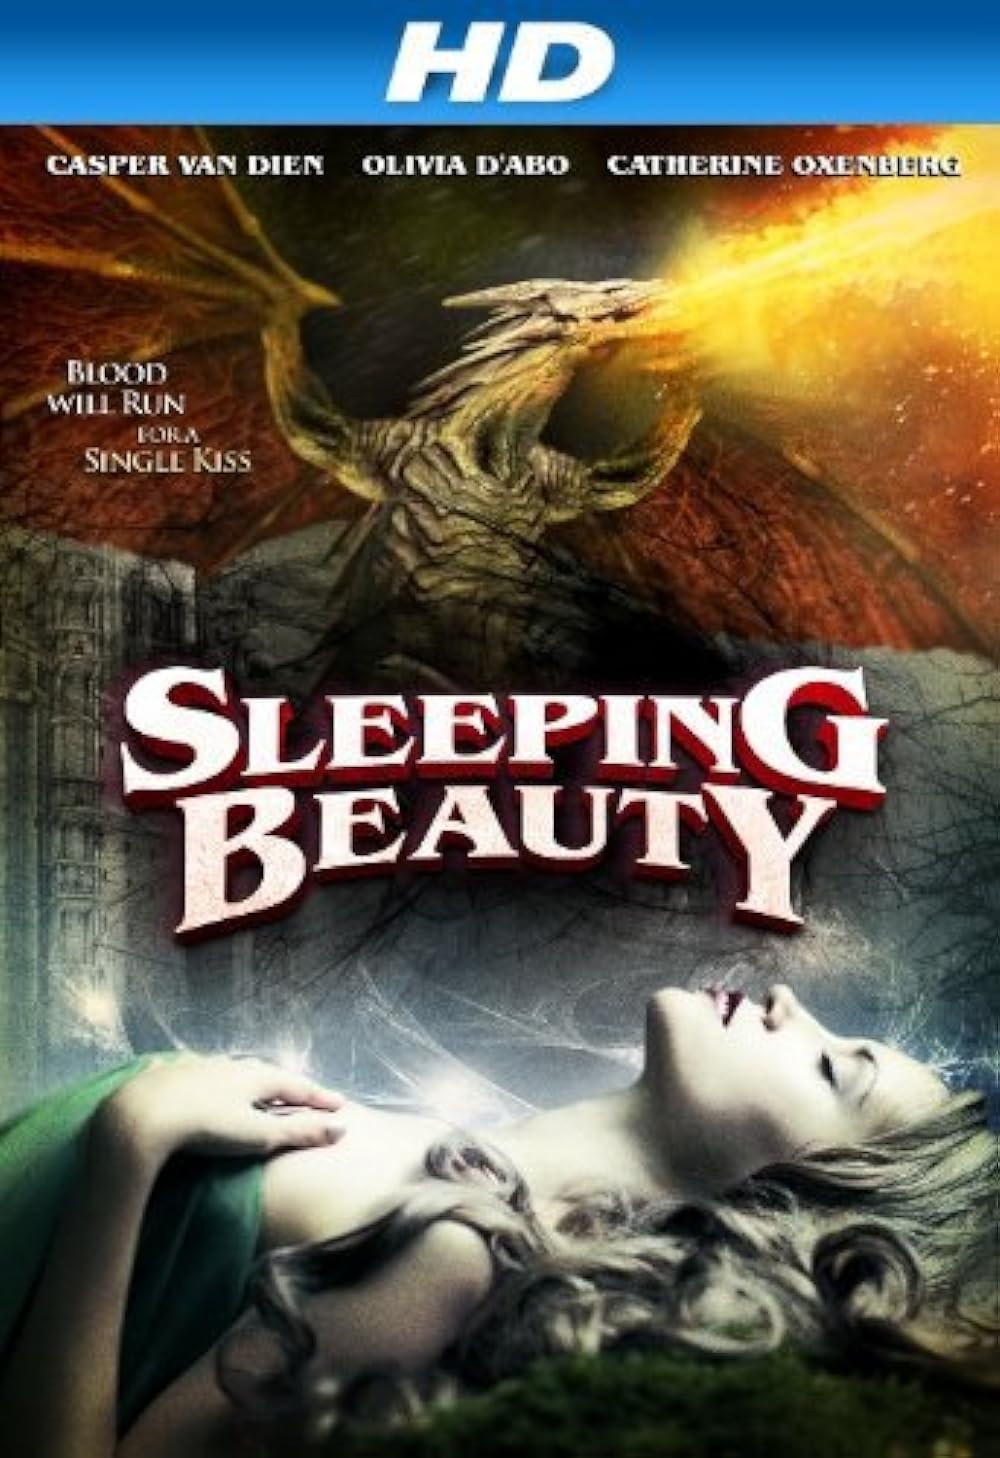 clayton jackson recommends sleeping beauty 2011 putlocker pic